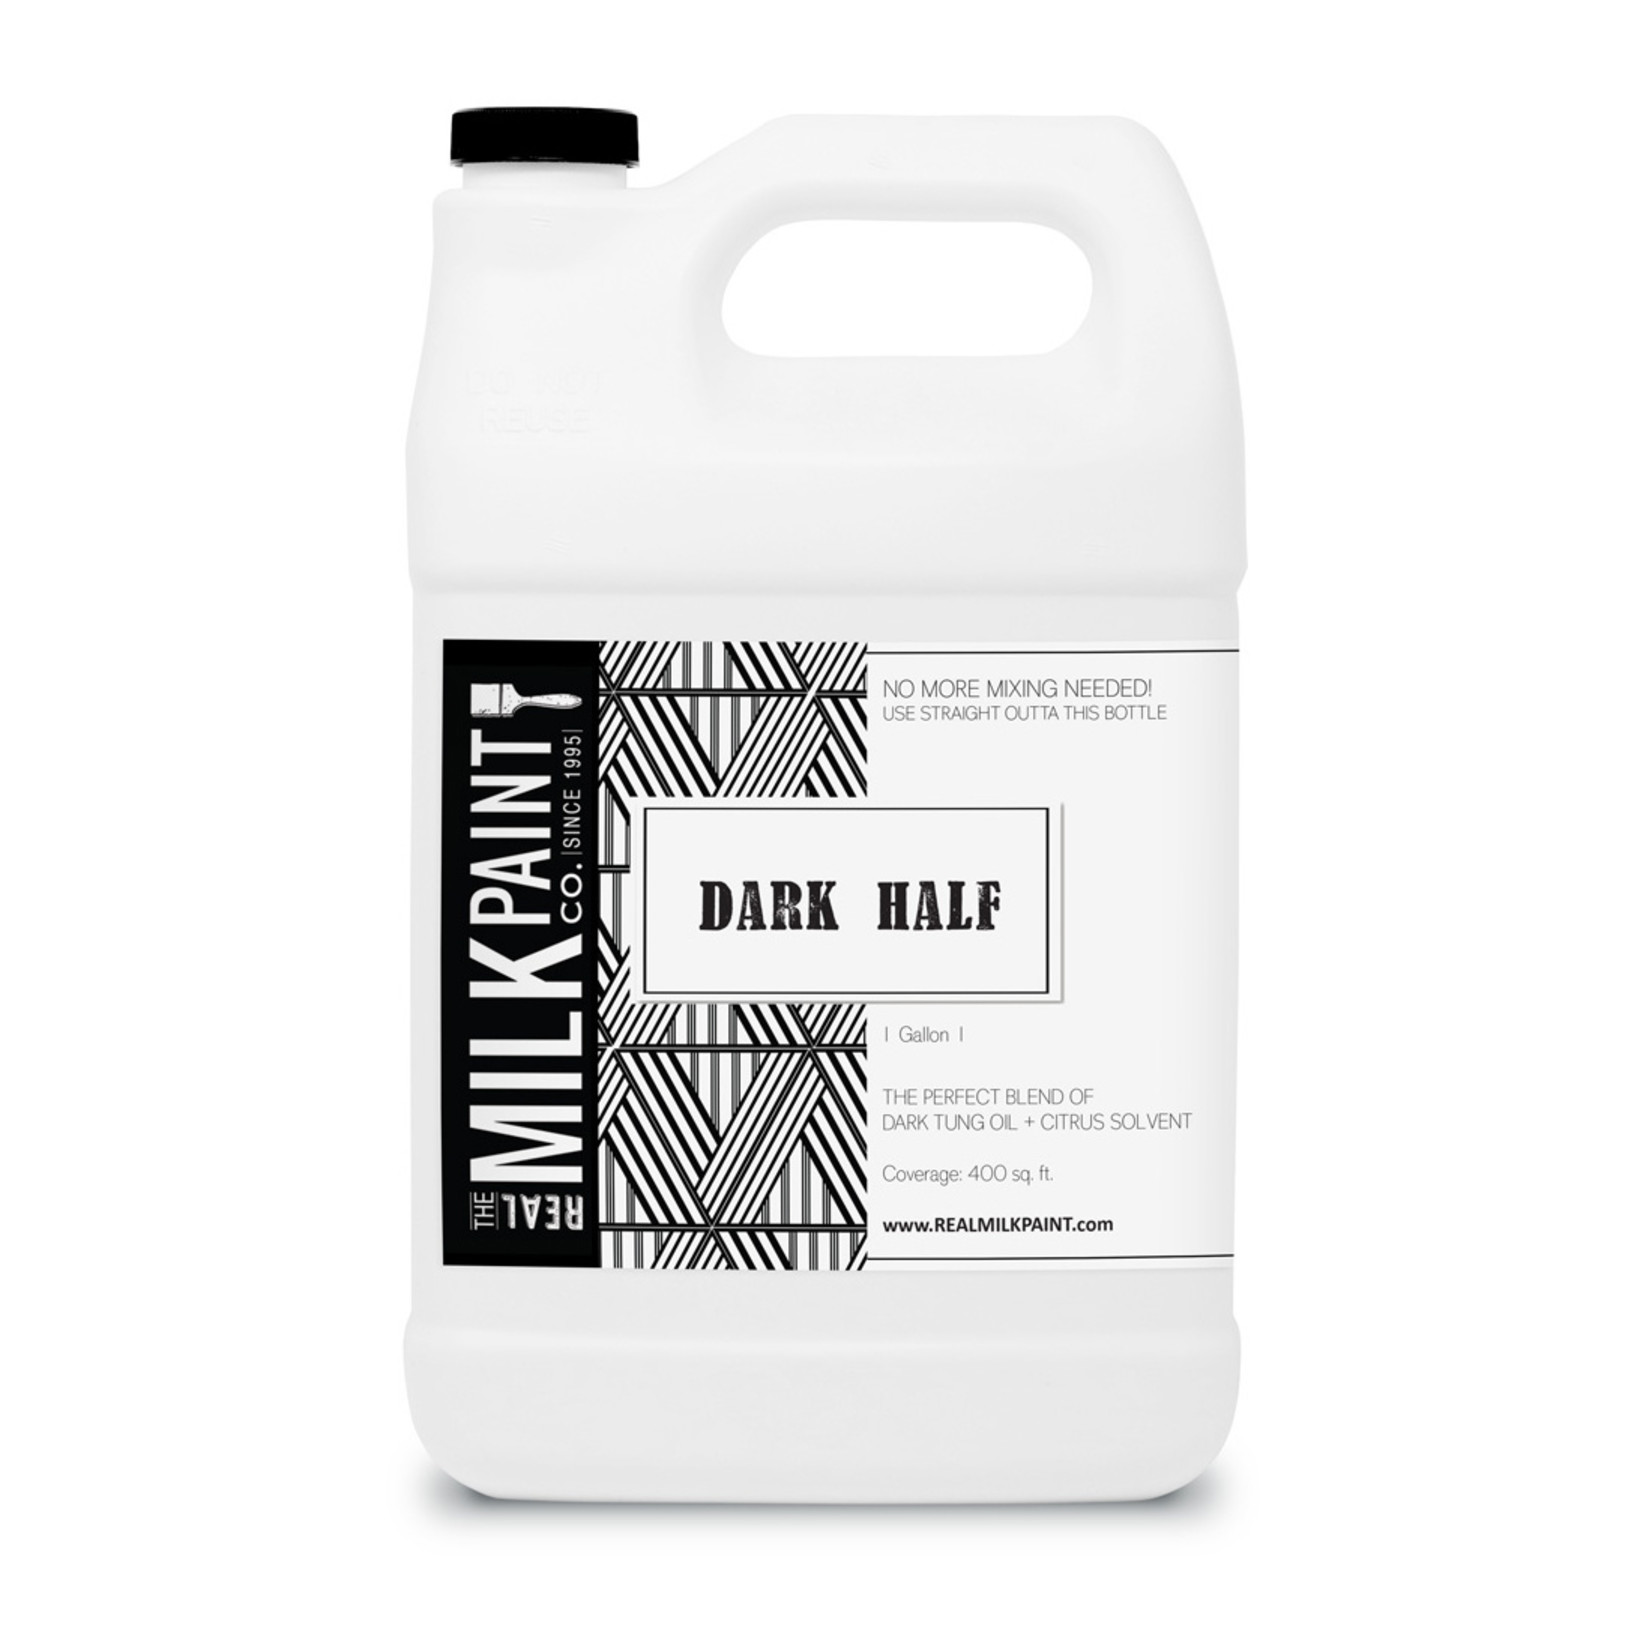 The Real Milk Paint Co. Real Milk Paint Dark Half